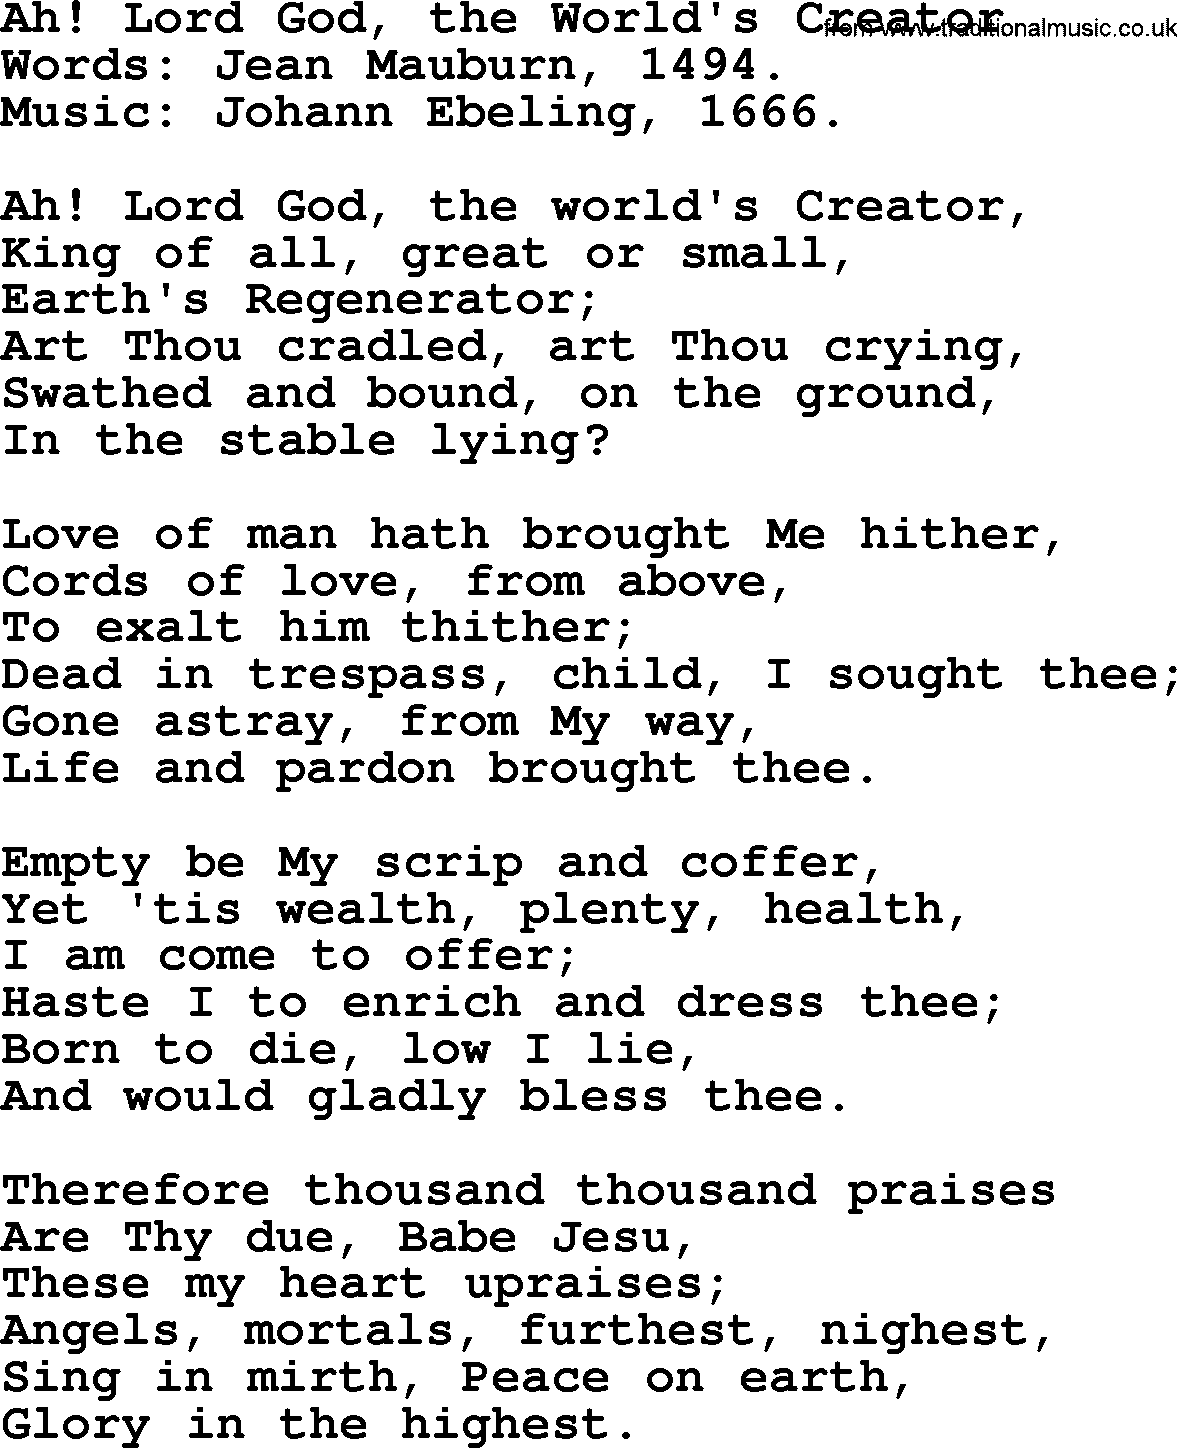 Christmas Hymns, Carols and Songs, title: Ah! Lord God, The World's Creator, lyrics with PDF